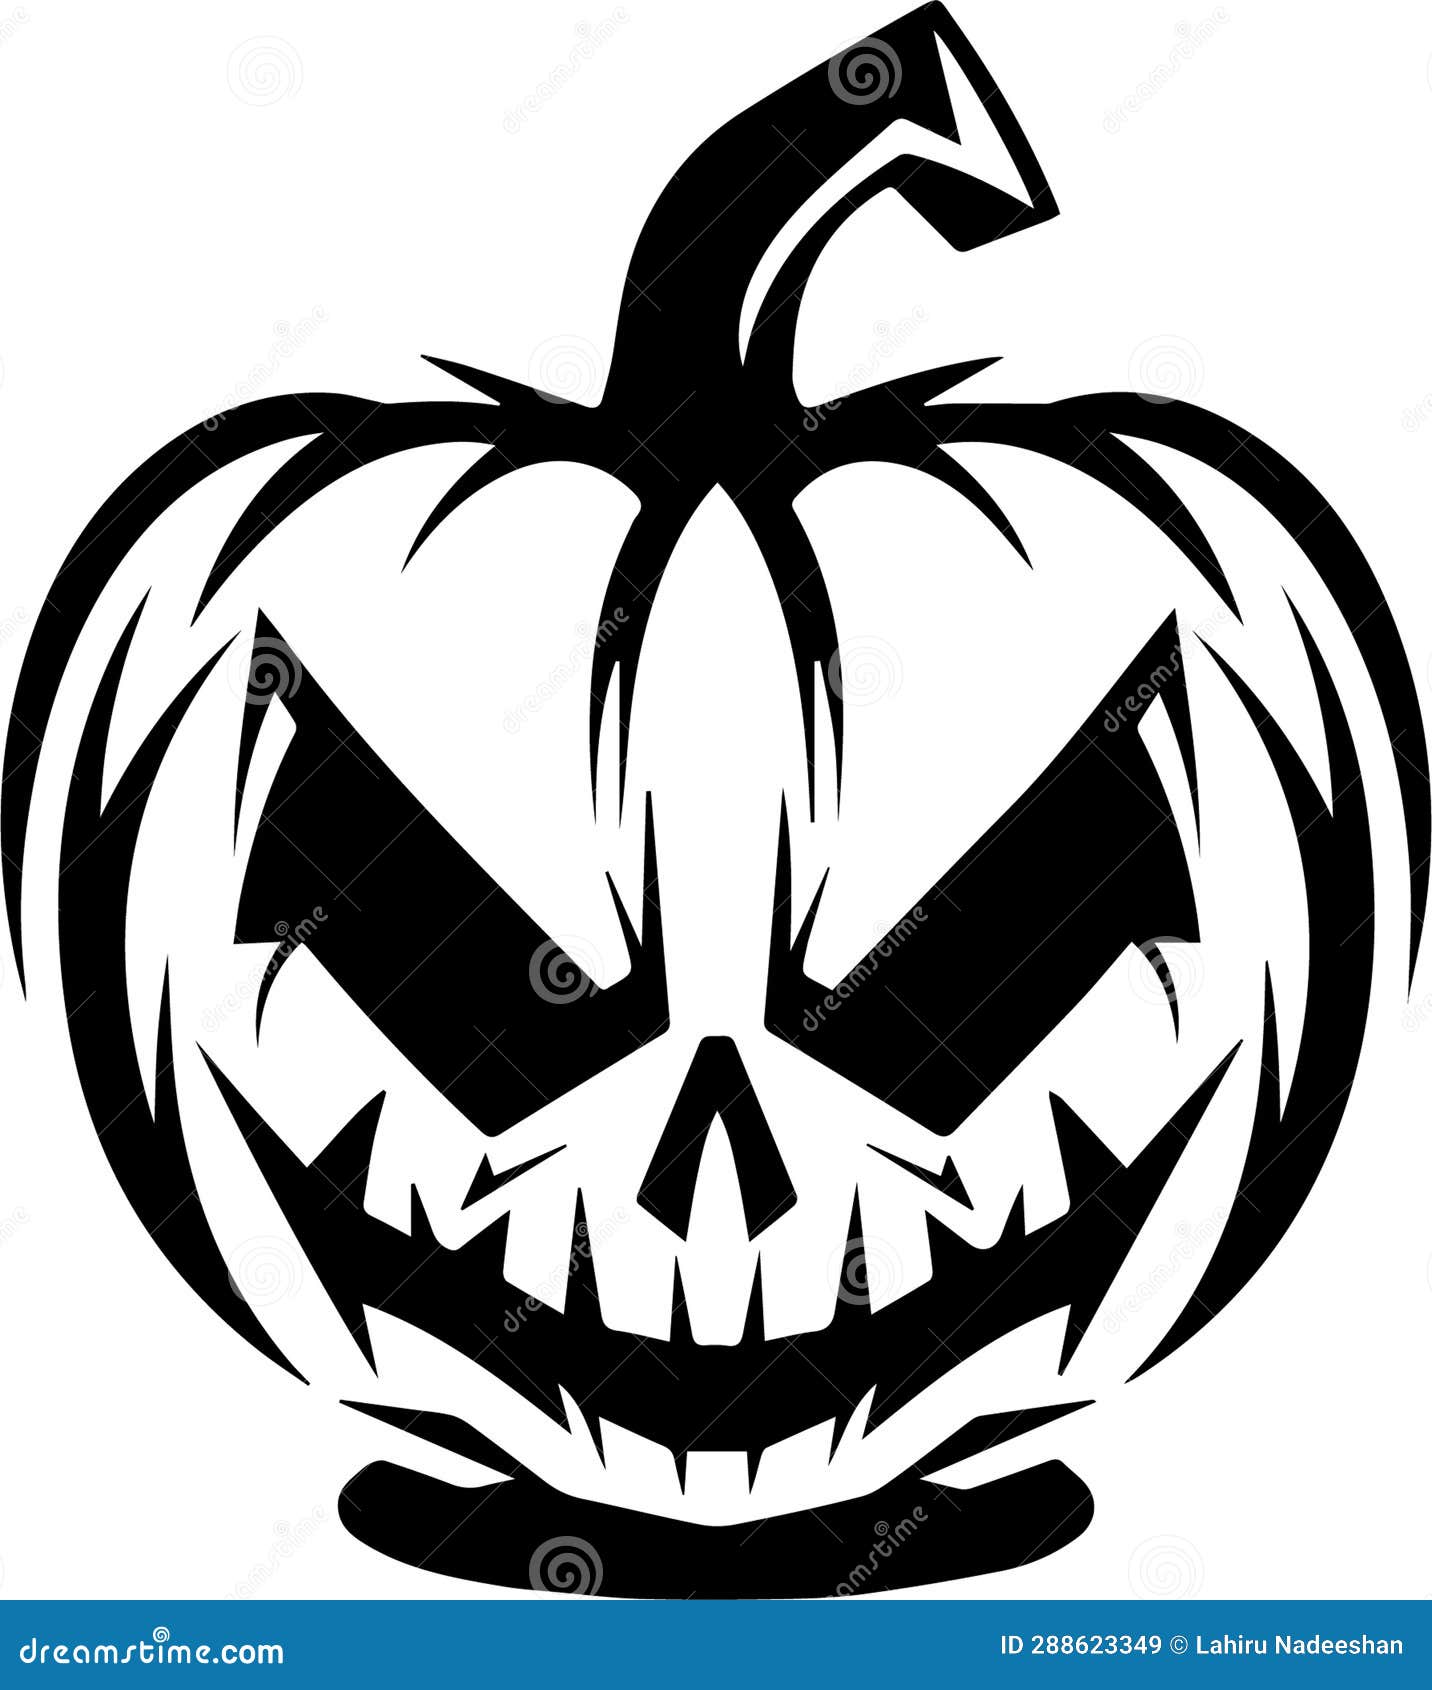 spooktacular spellcaster: trendy halloween corrector 